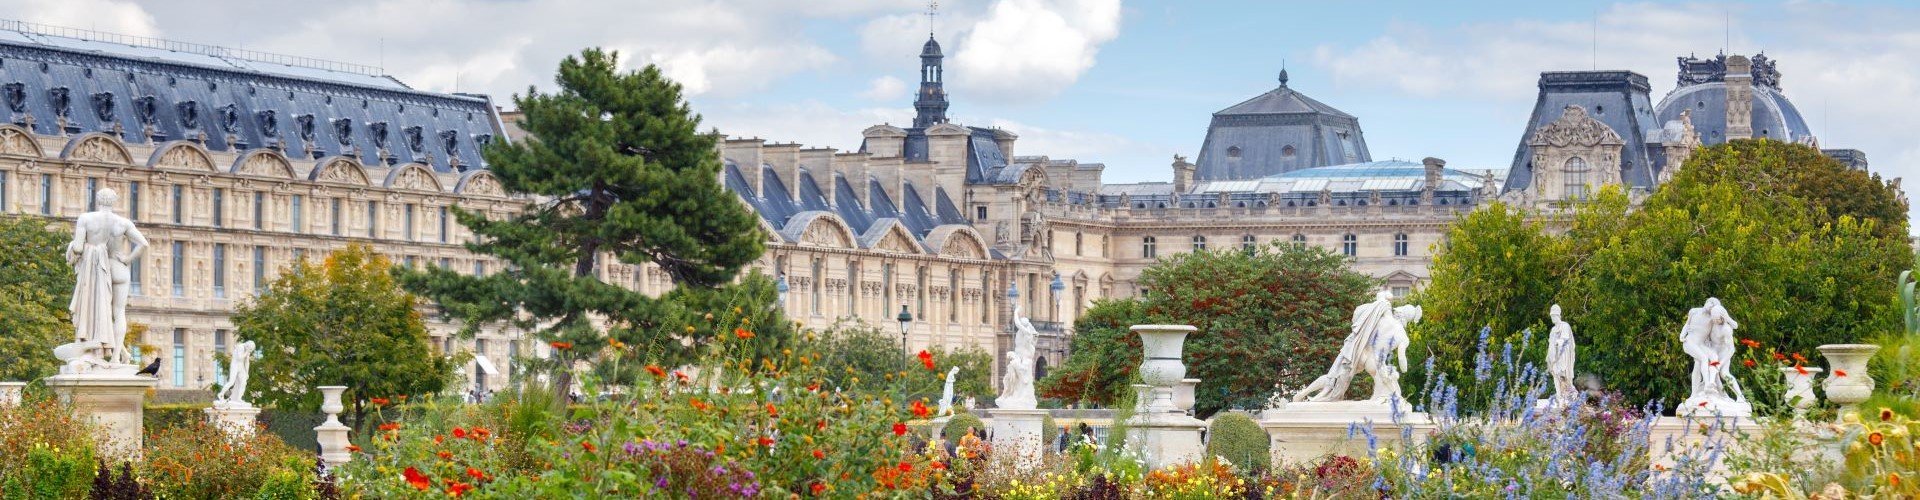 Ausflugsziel Louvre & Tuilerien-Garten